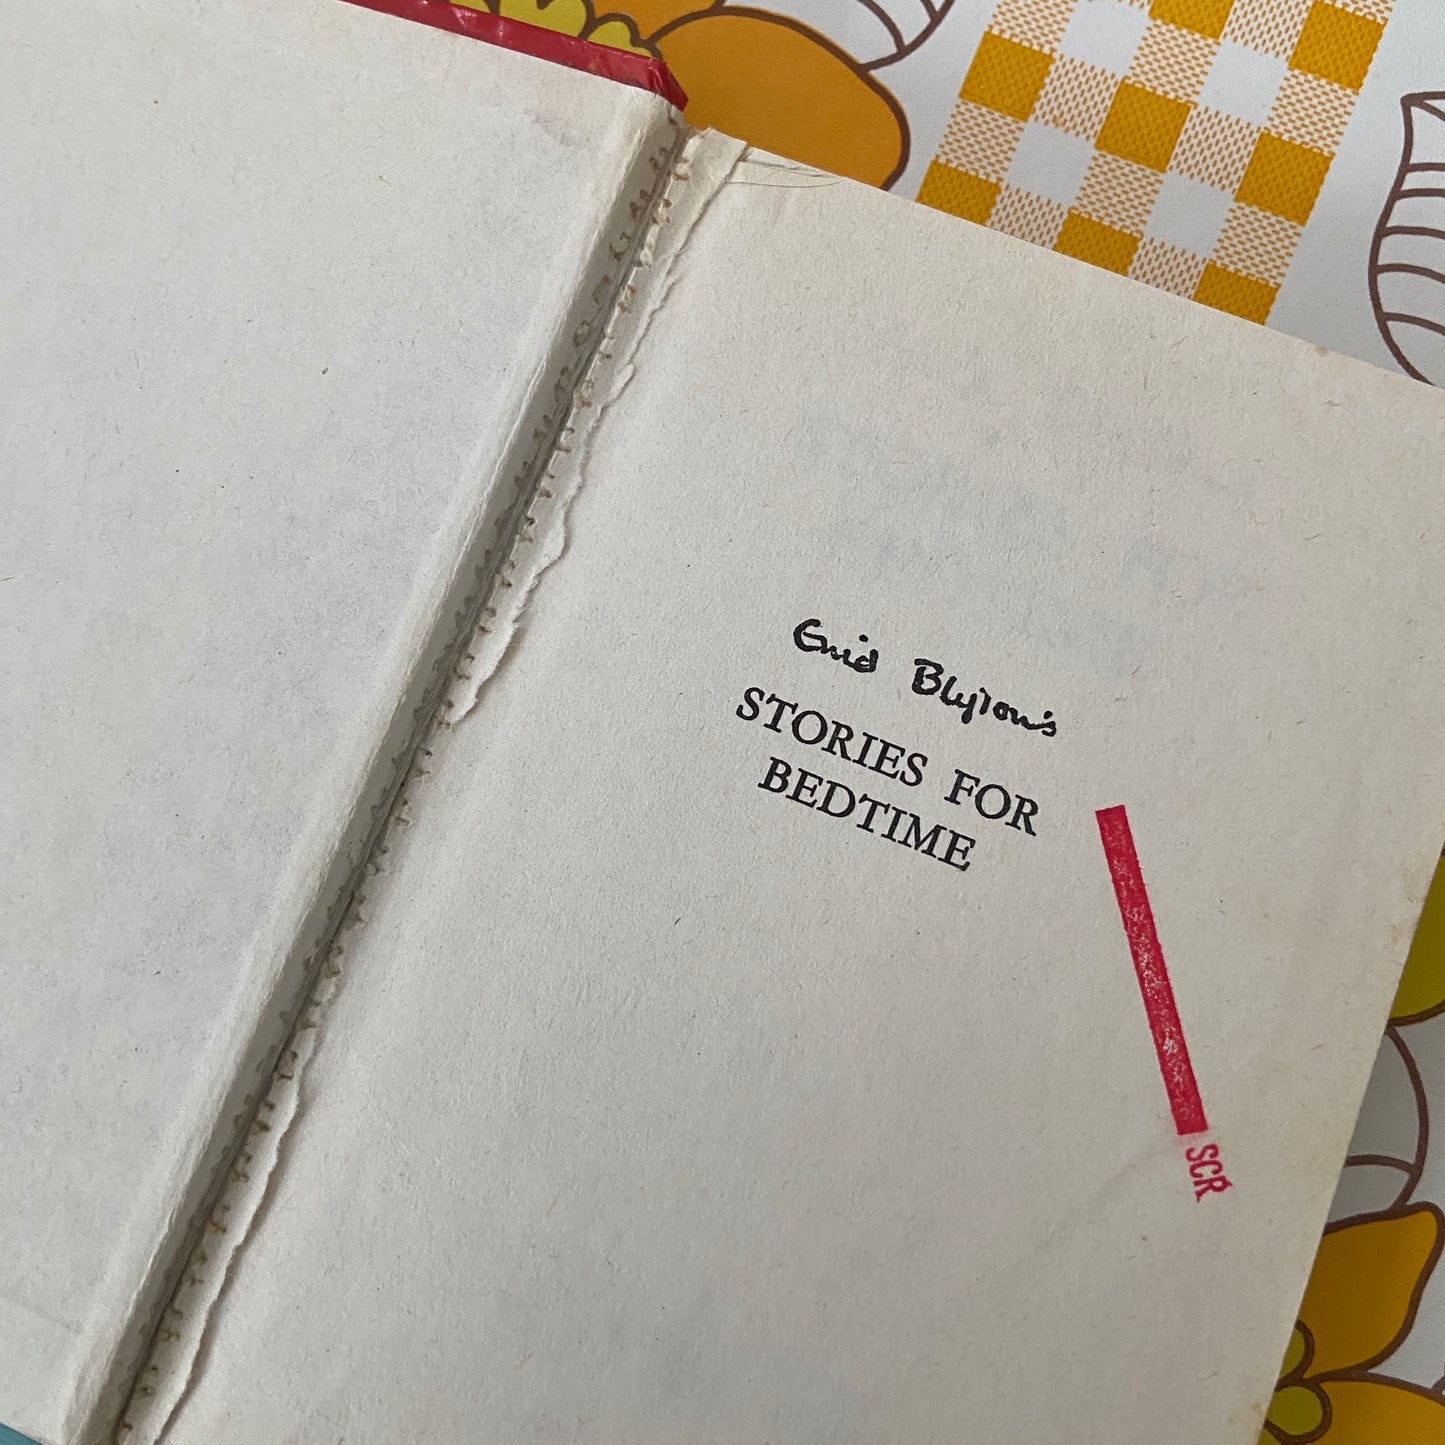 ENID BLYTON Stories of Bedtime Vintage Book